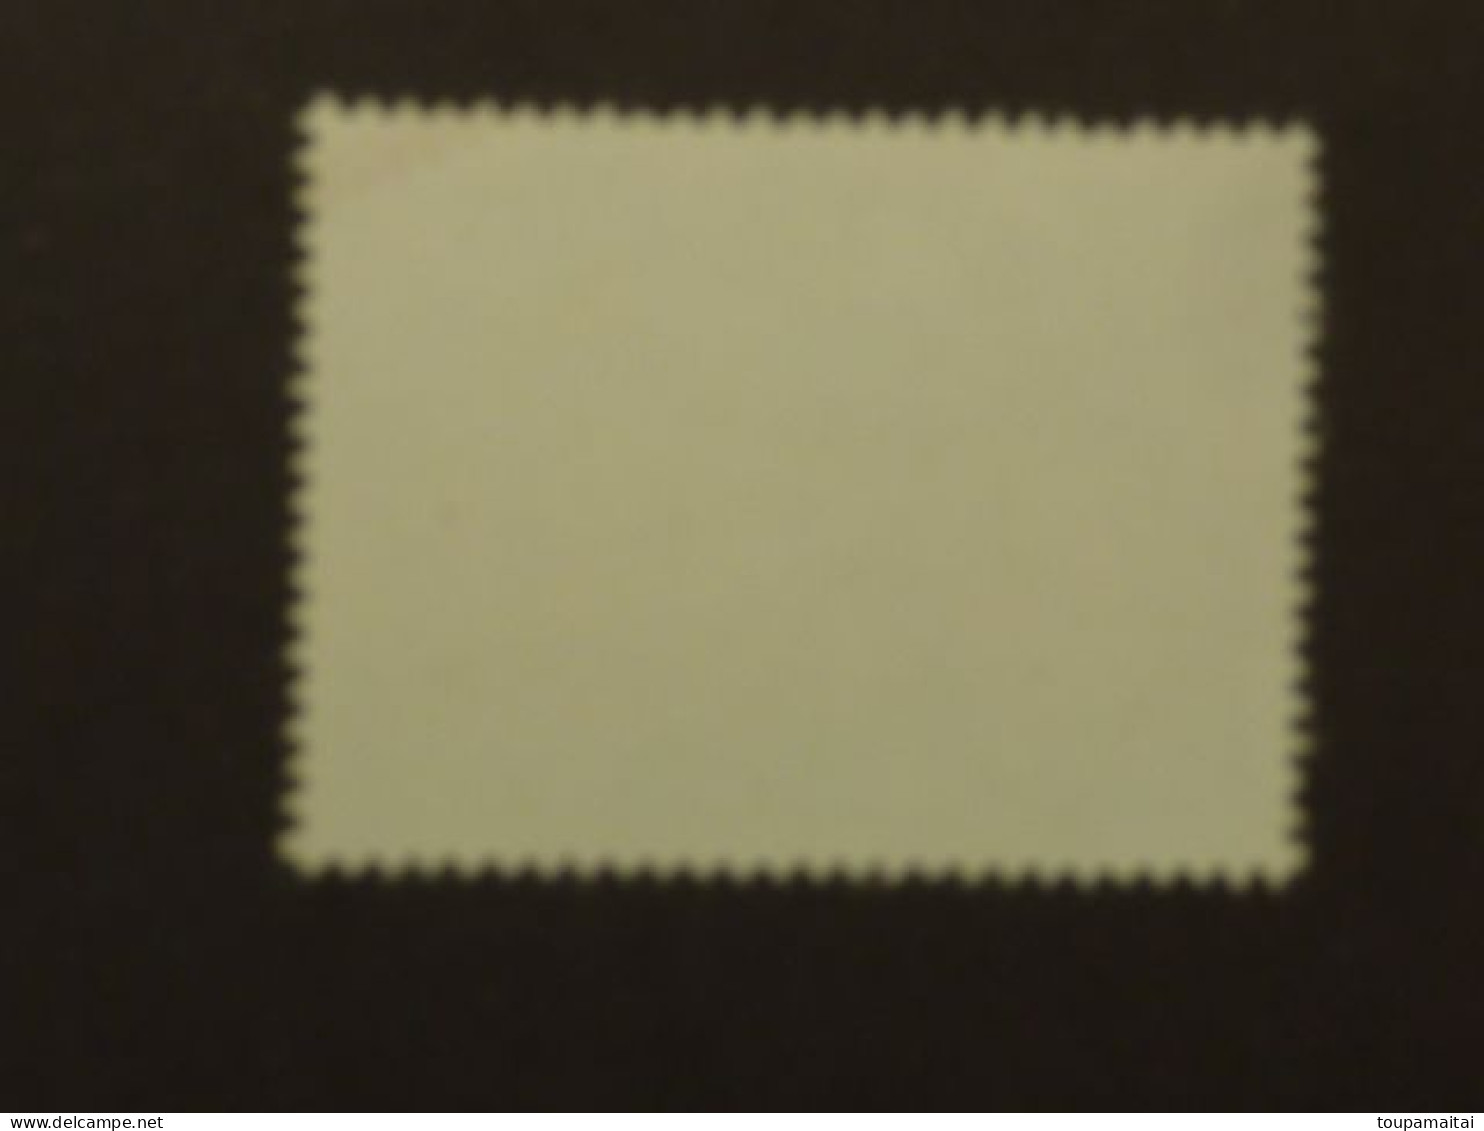 POLYNESIE FRANCAISE, Année 1979, YT N° 136 MNH** Motu - Unused Stamps